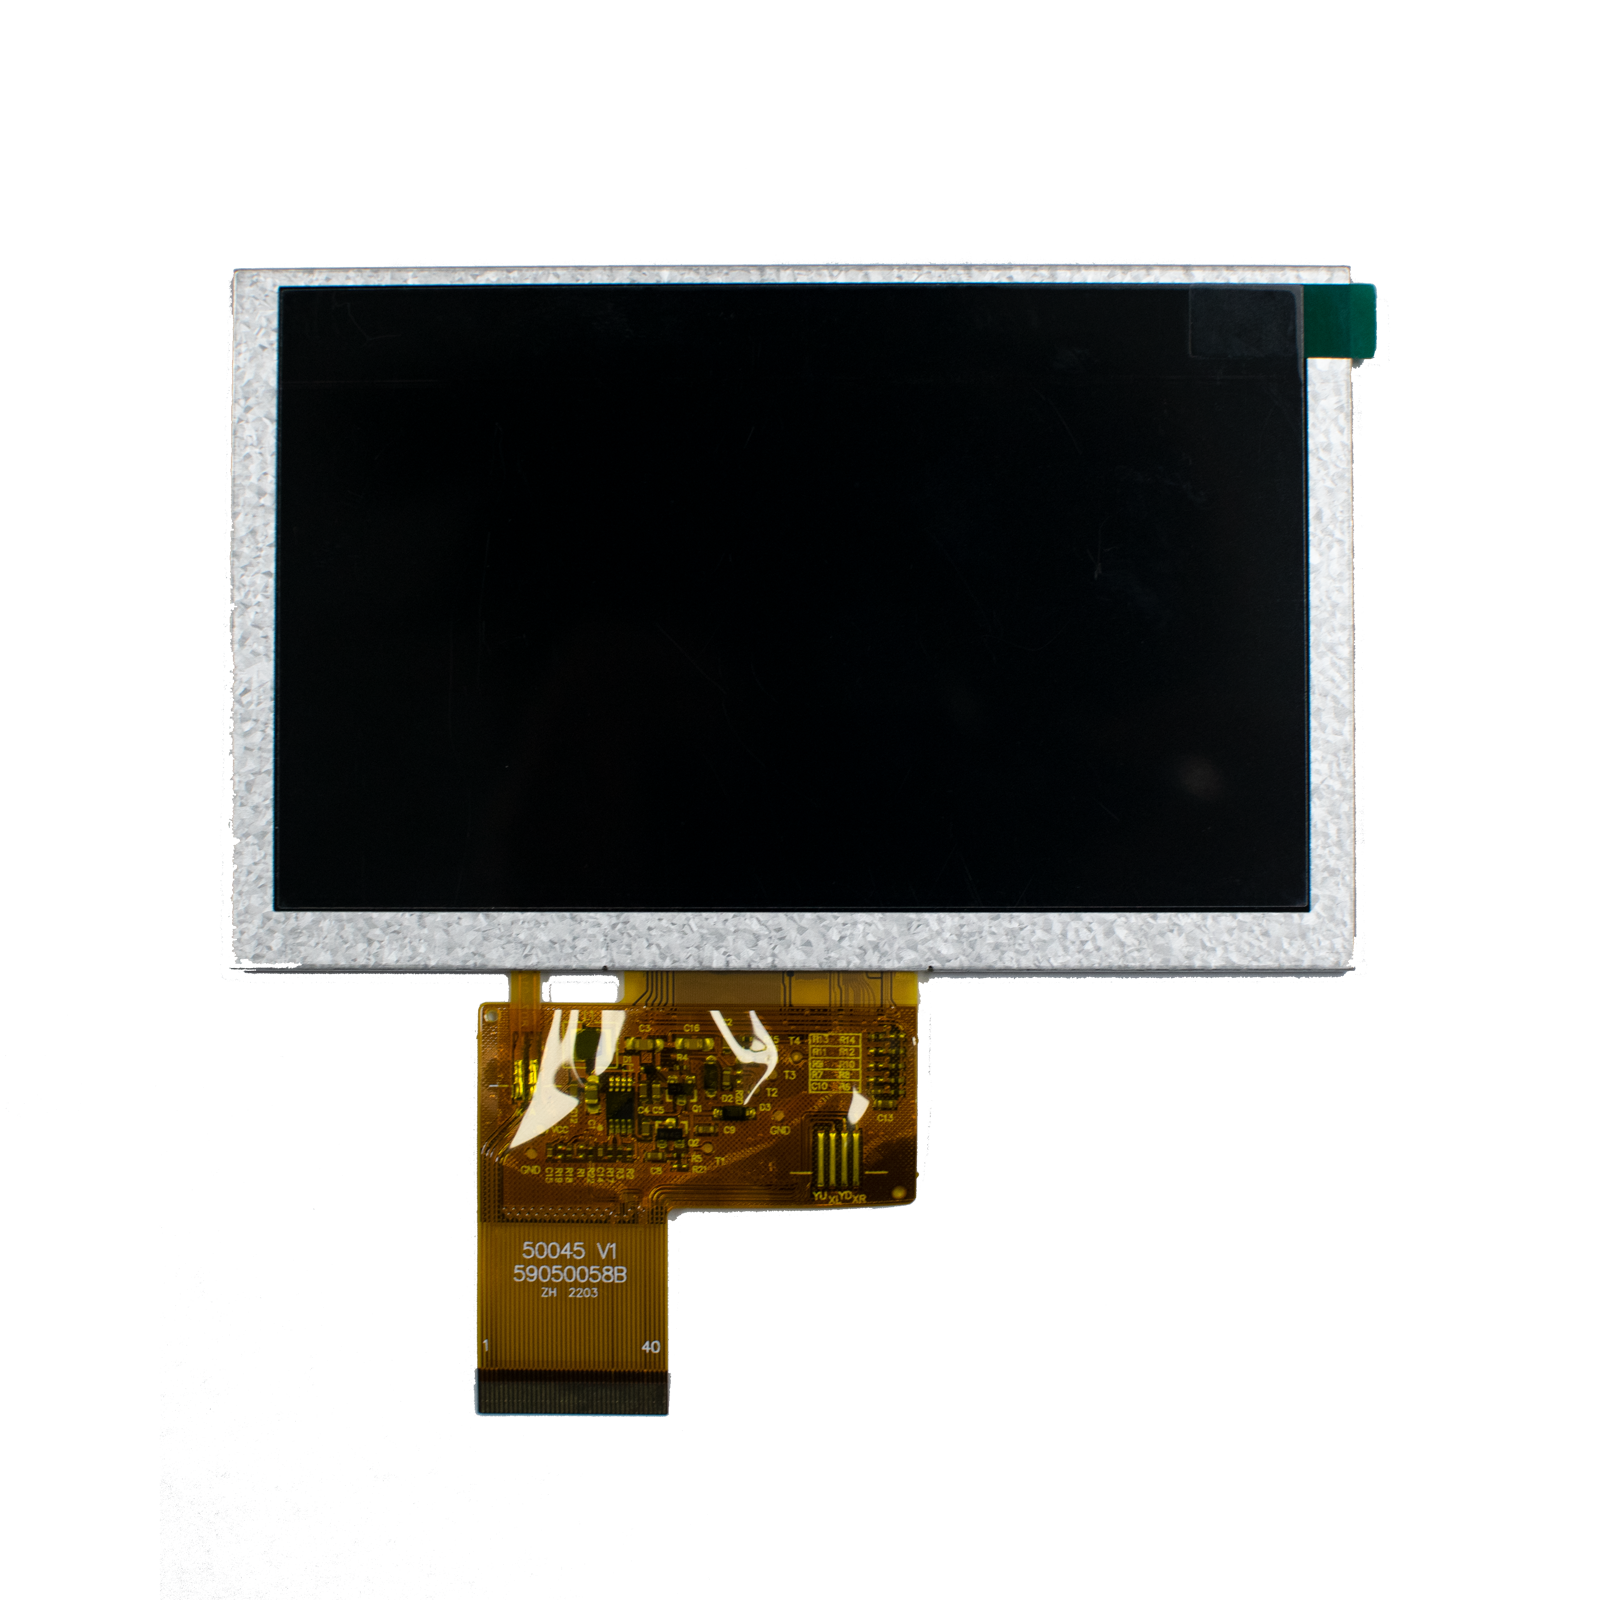 Display Module 5.0" 800x480 TFT LCD Display Panel - RGB